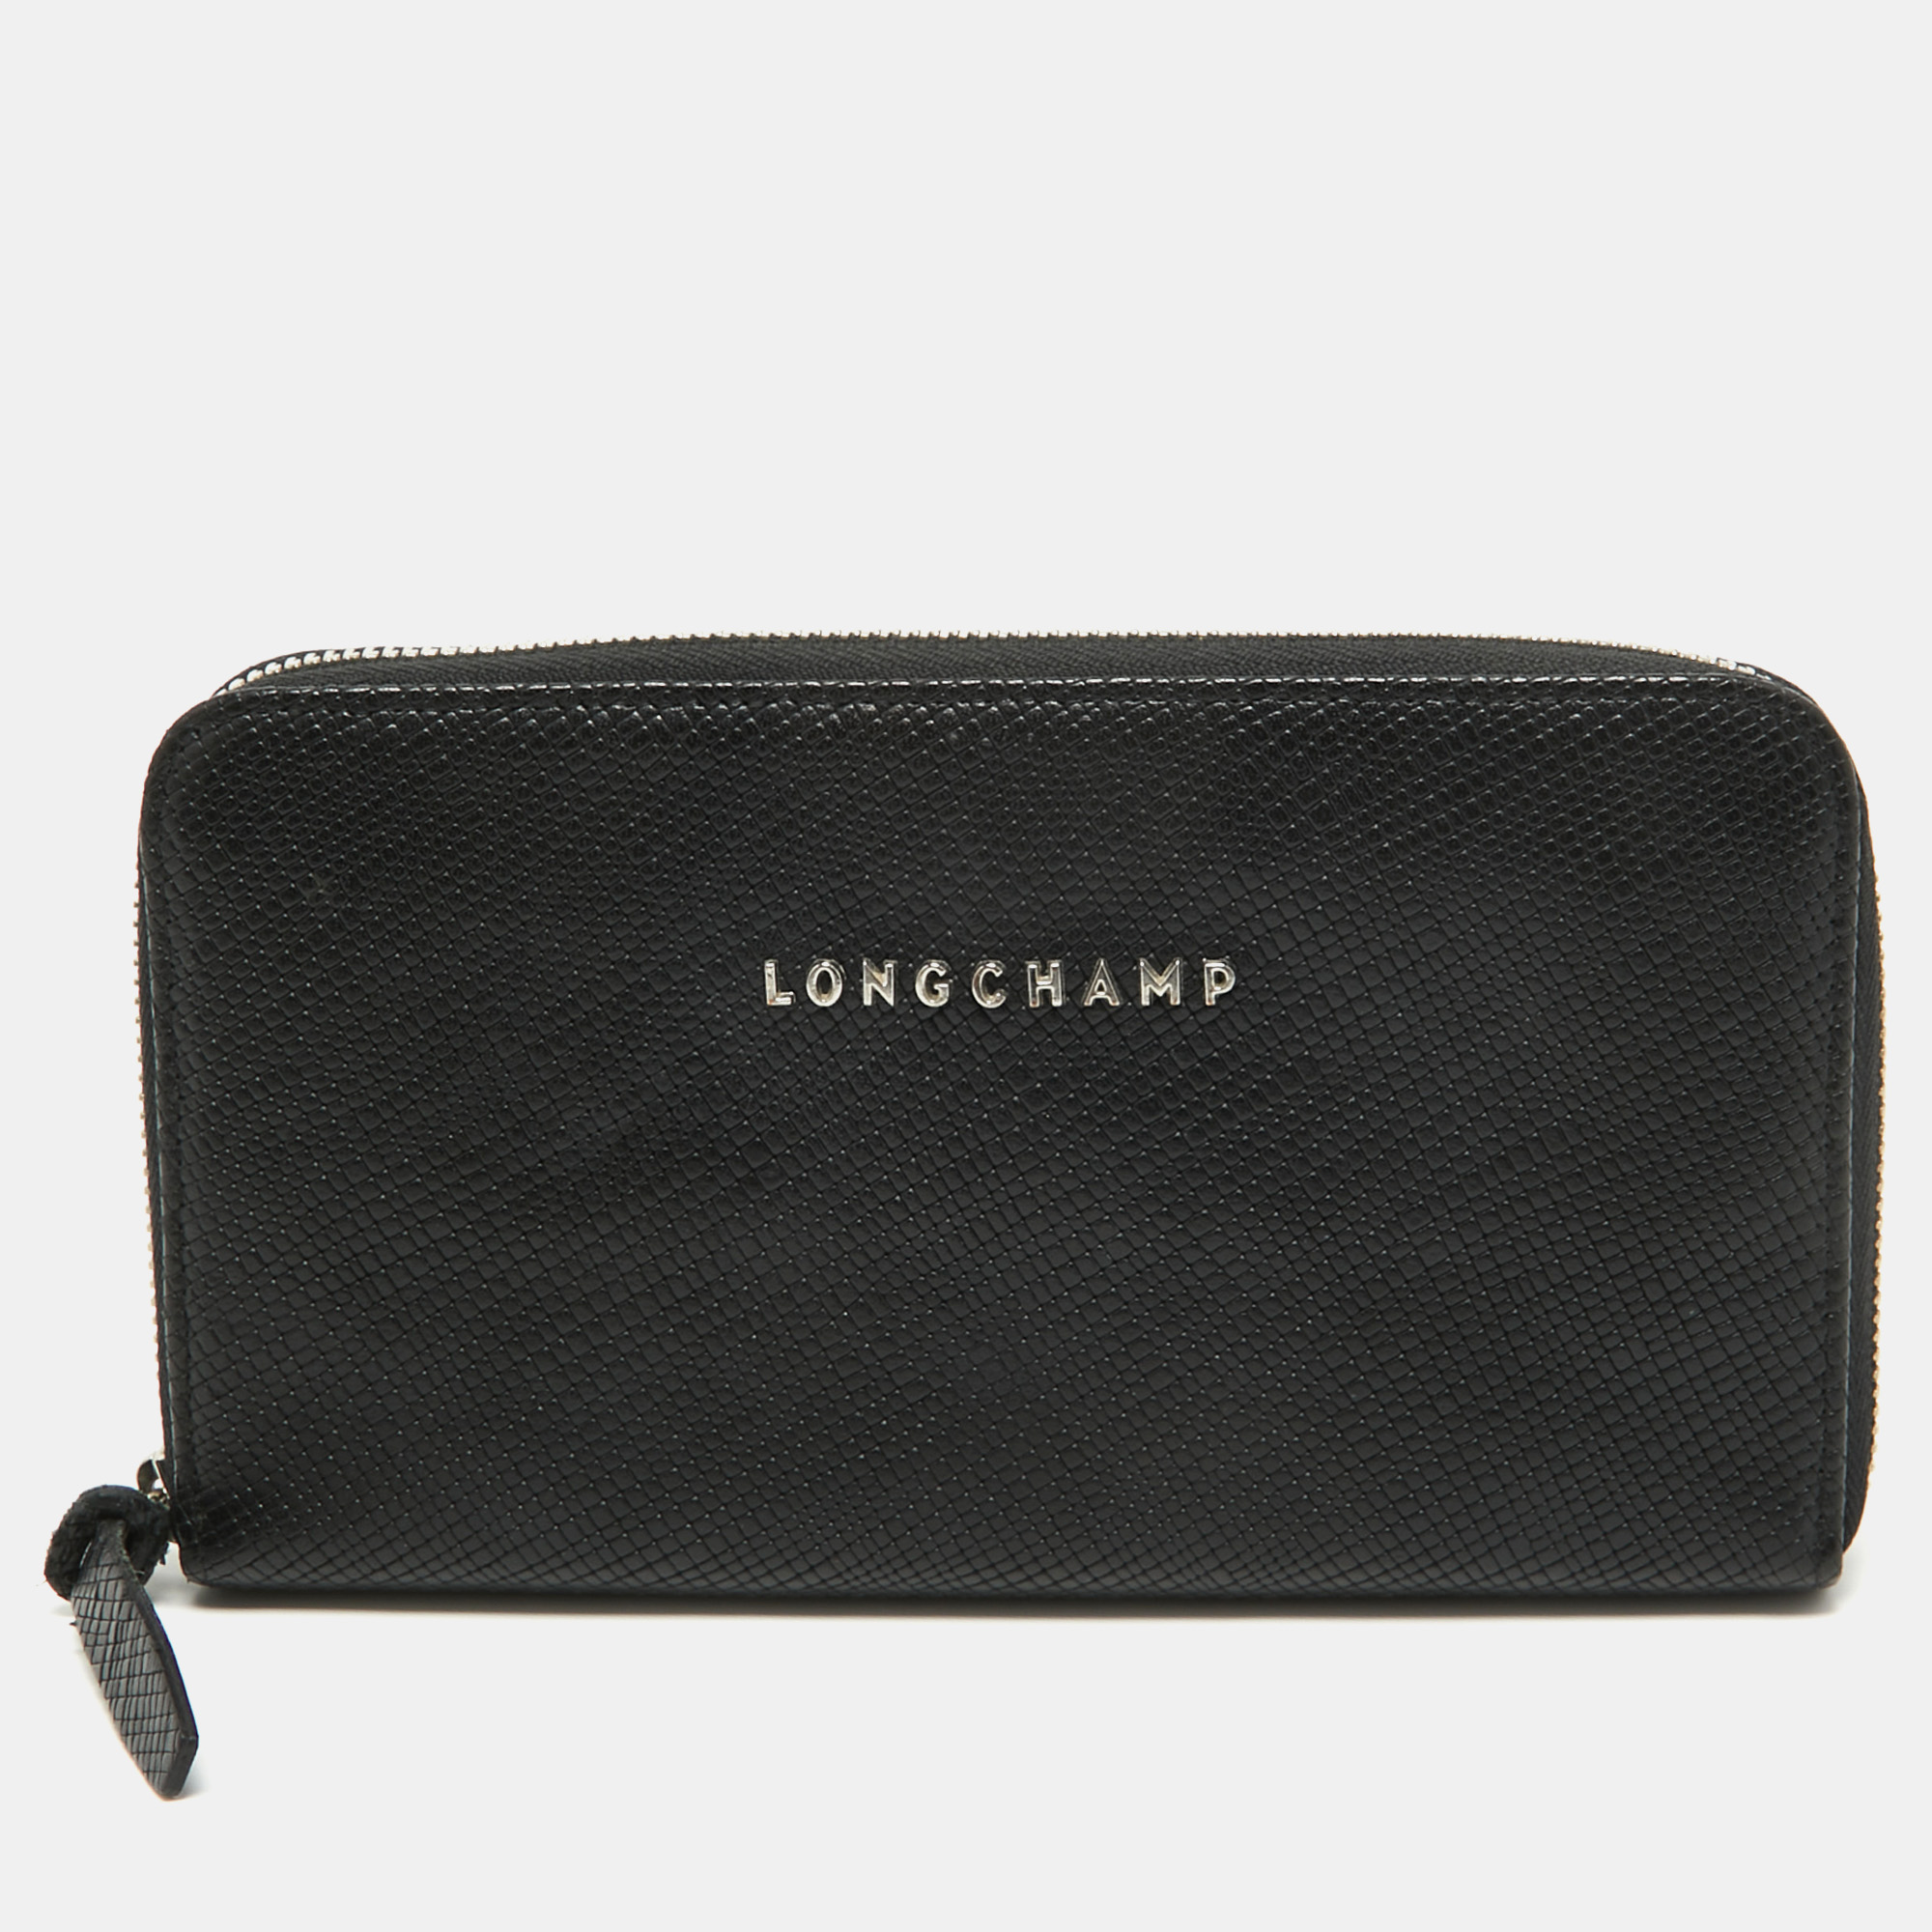 Longchamp Black Textured Leather Zip Around Wallet